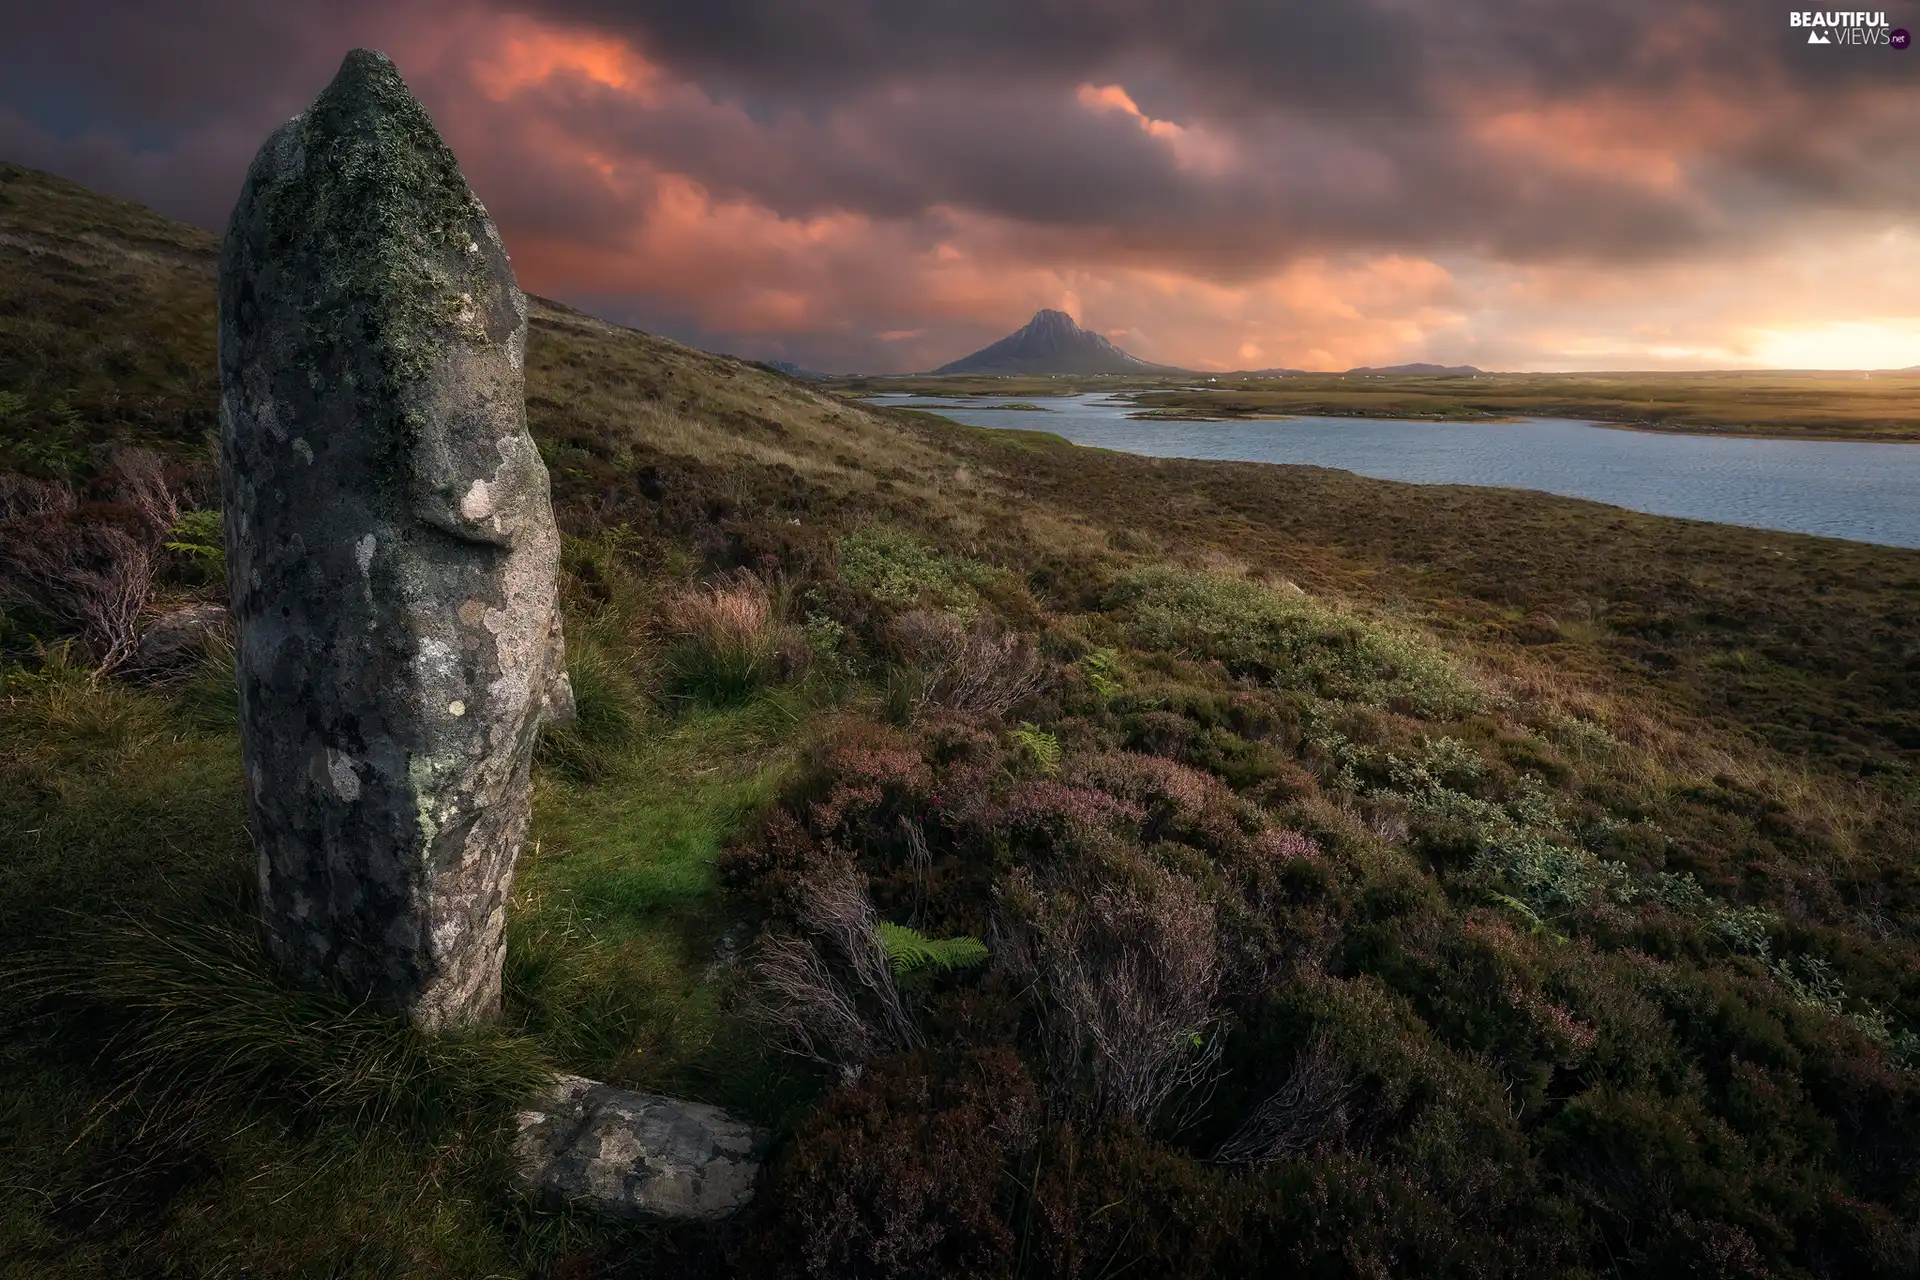 Rocks, VEGETATION, Great Sunsets, heathers, mountains, Outer Hebrides Archipelago, Scotland, River